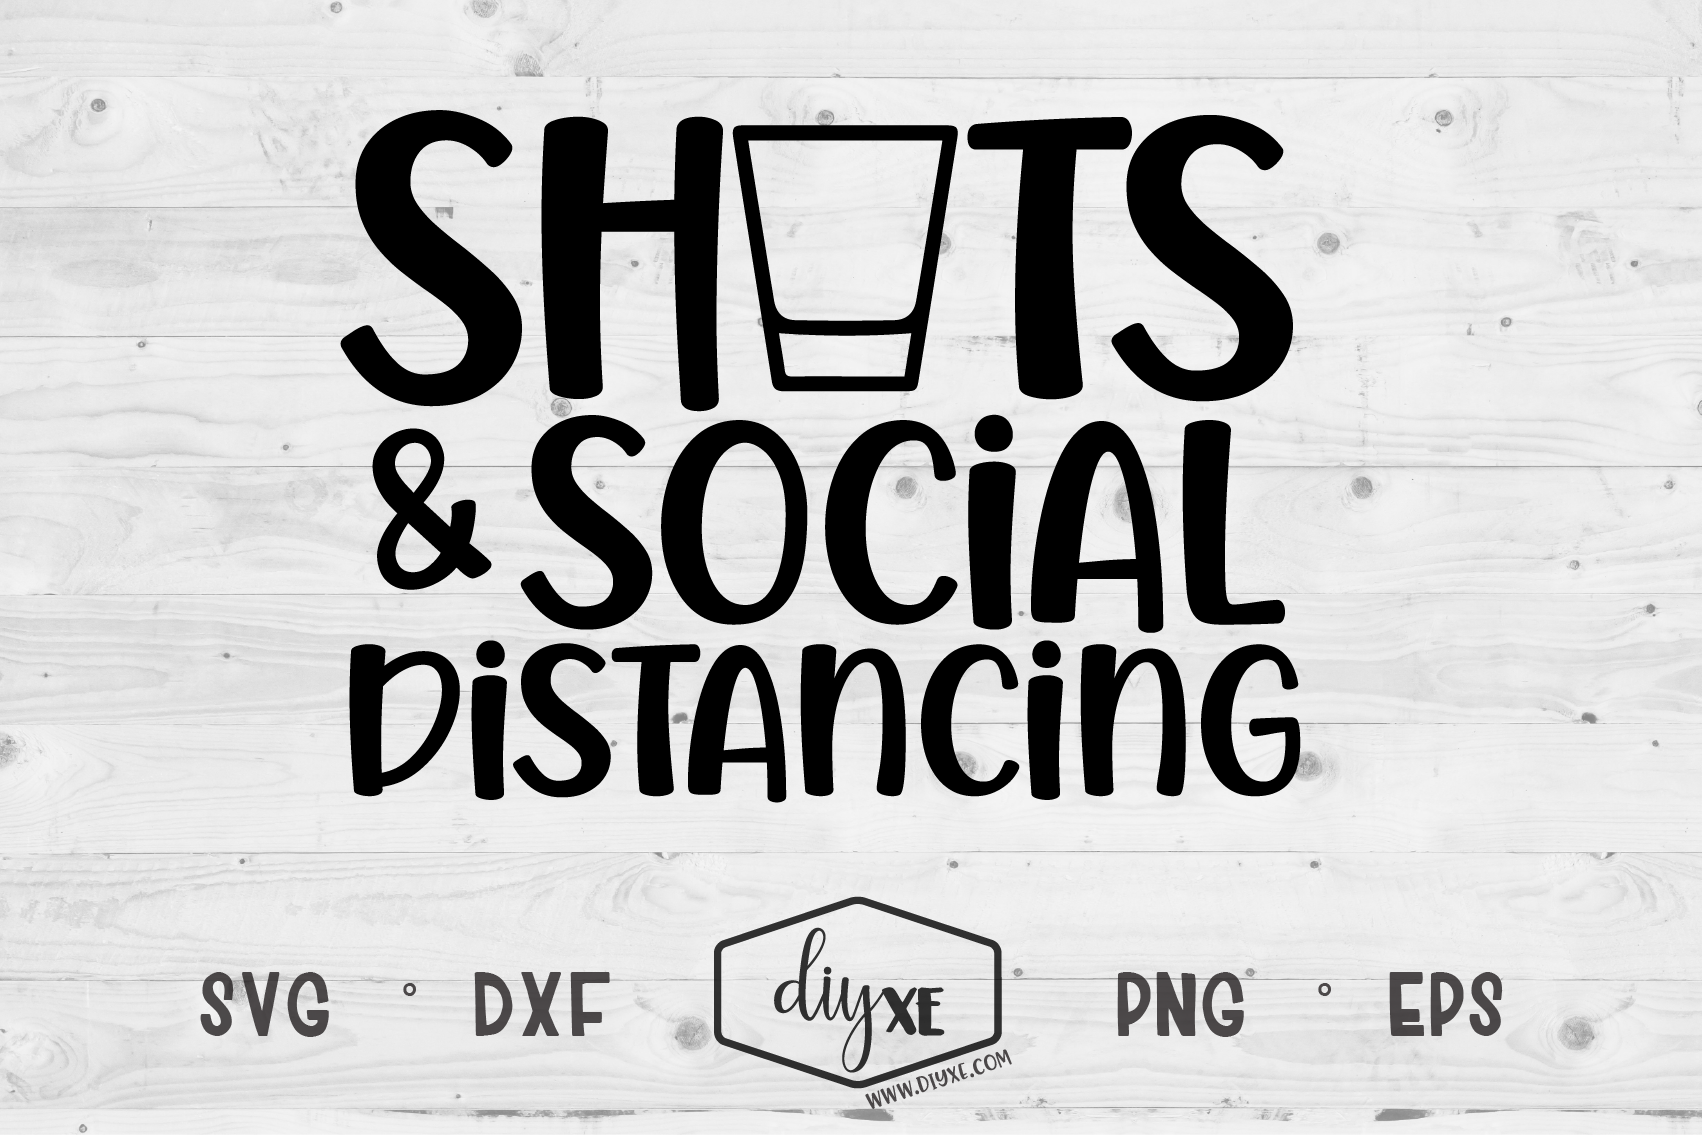 Download Shots & Social Distancing - A Quarantine SVG Cut File By DIYxe | TheHungryJPEG.com